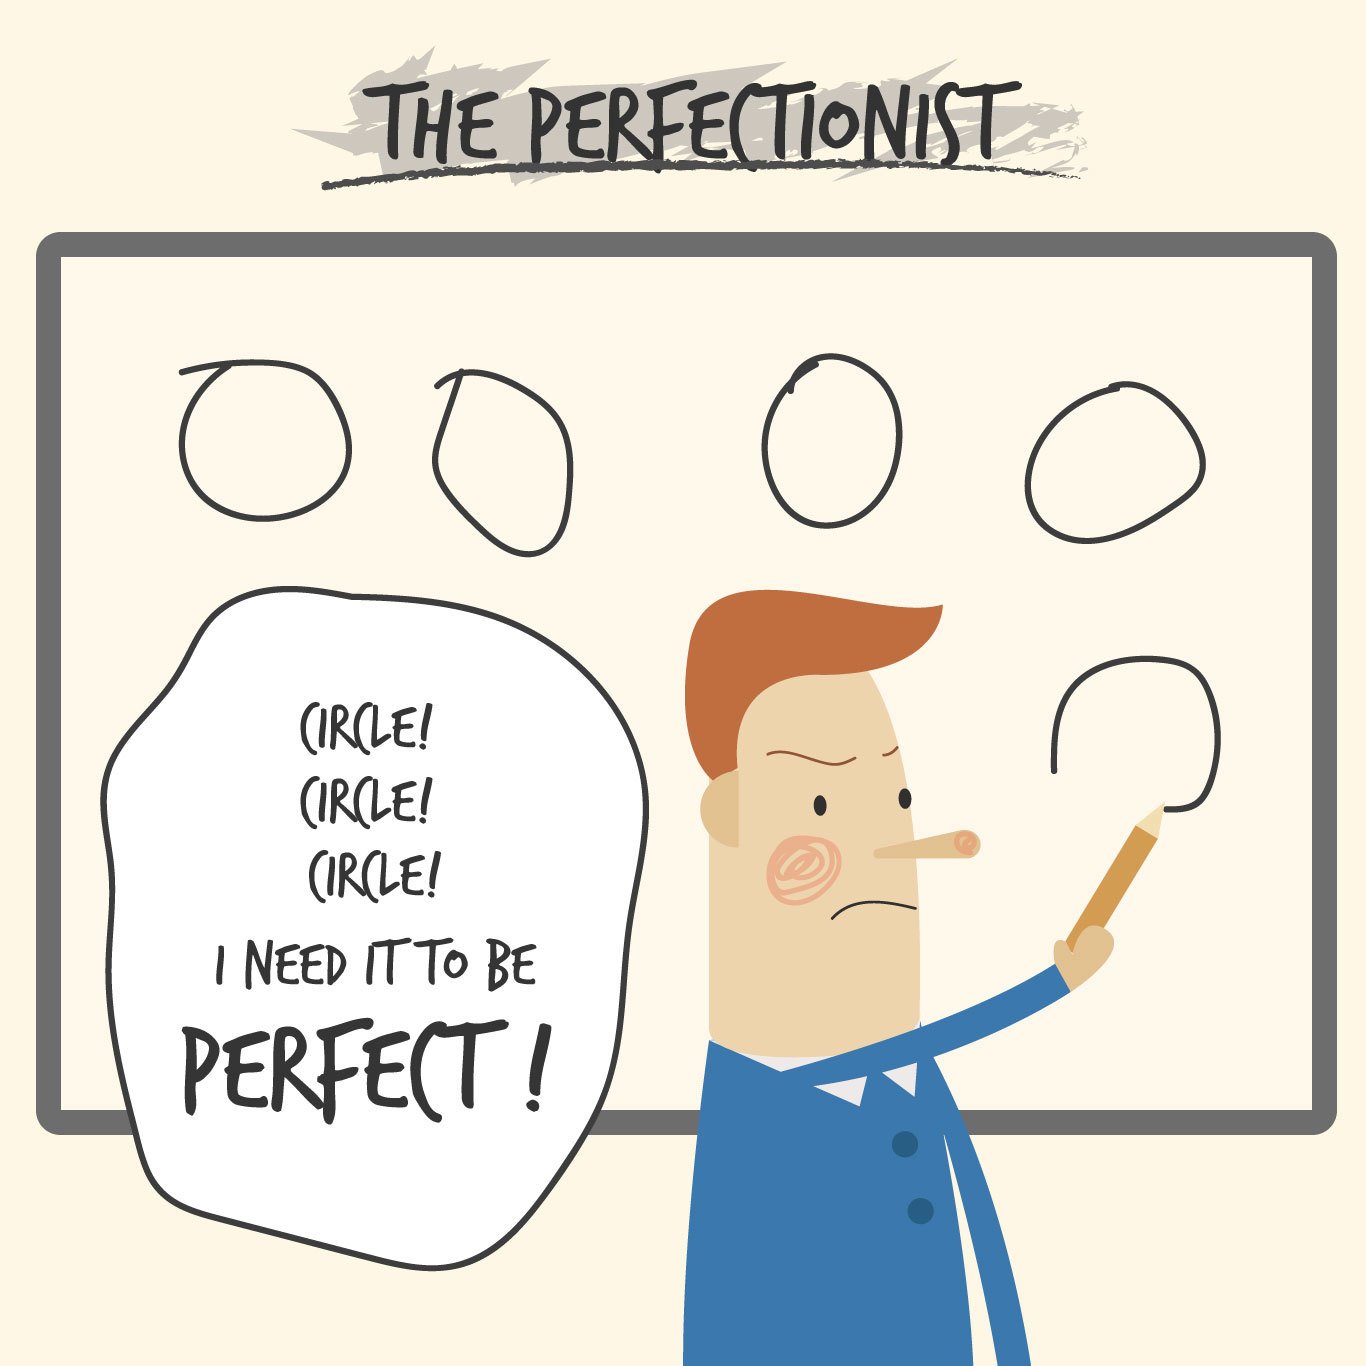 The perfectionist procrastination